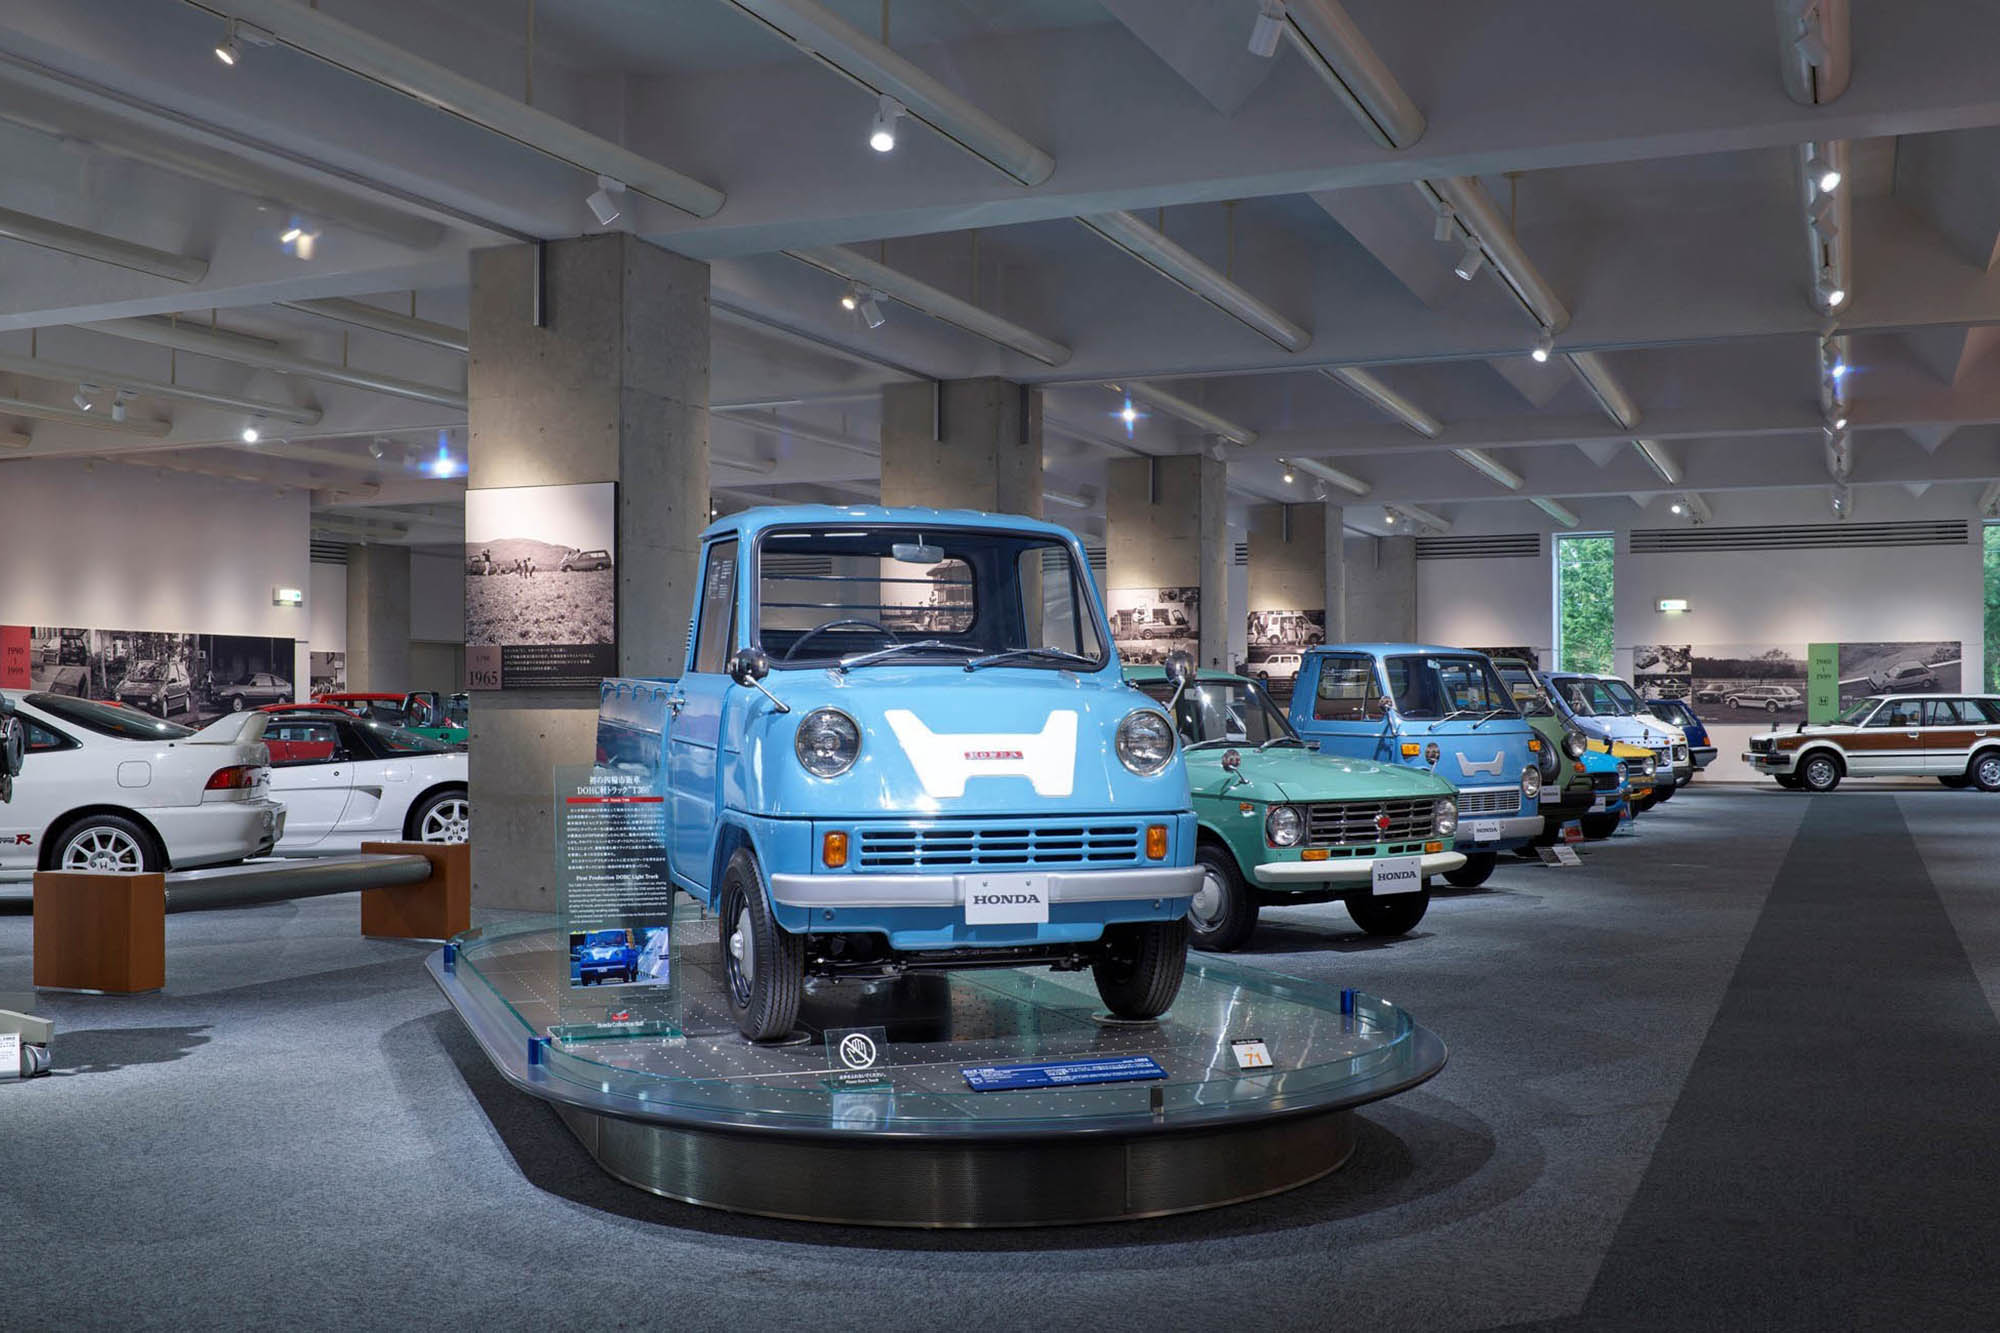 Display of historic Honda vehicles